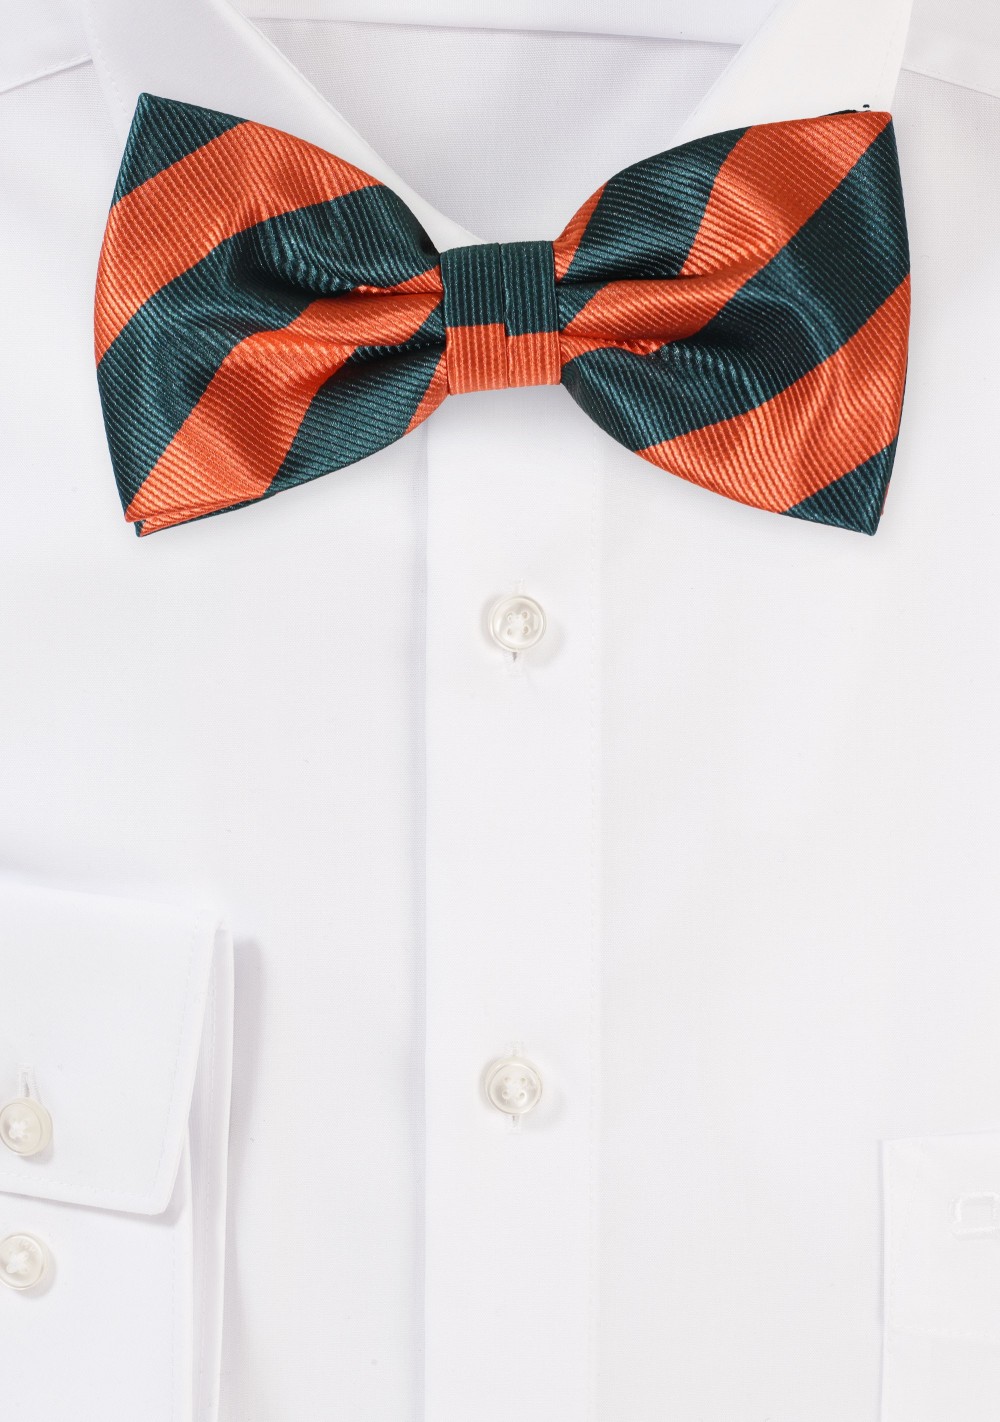 Repp Stripe Bow Tie in Navy and Orange